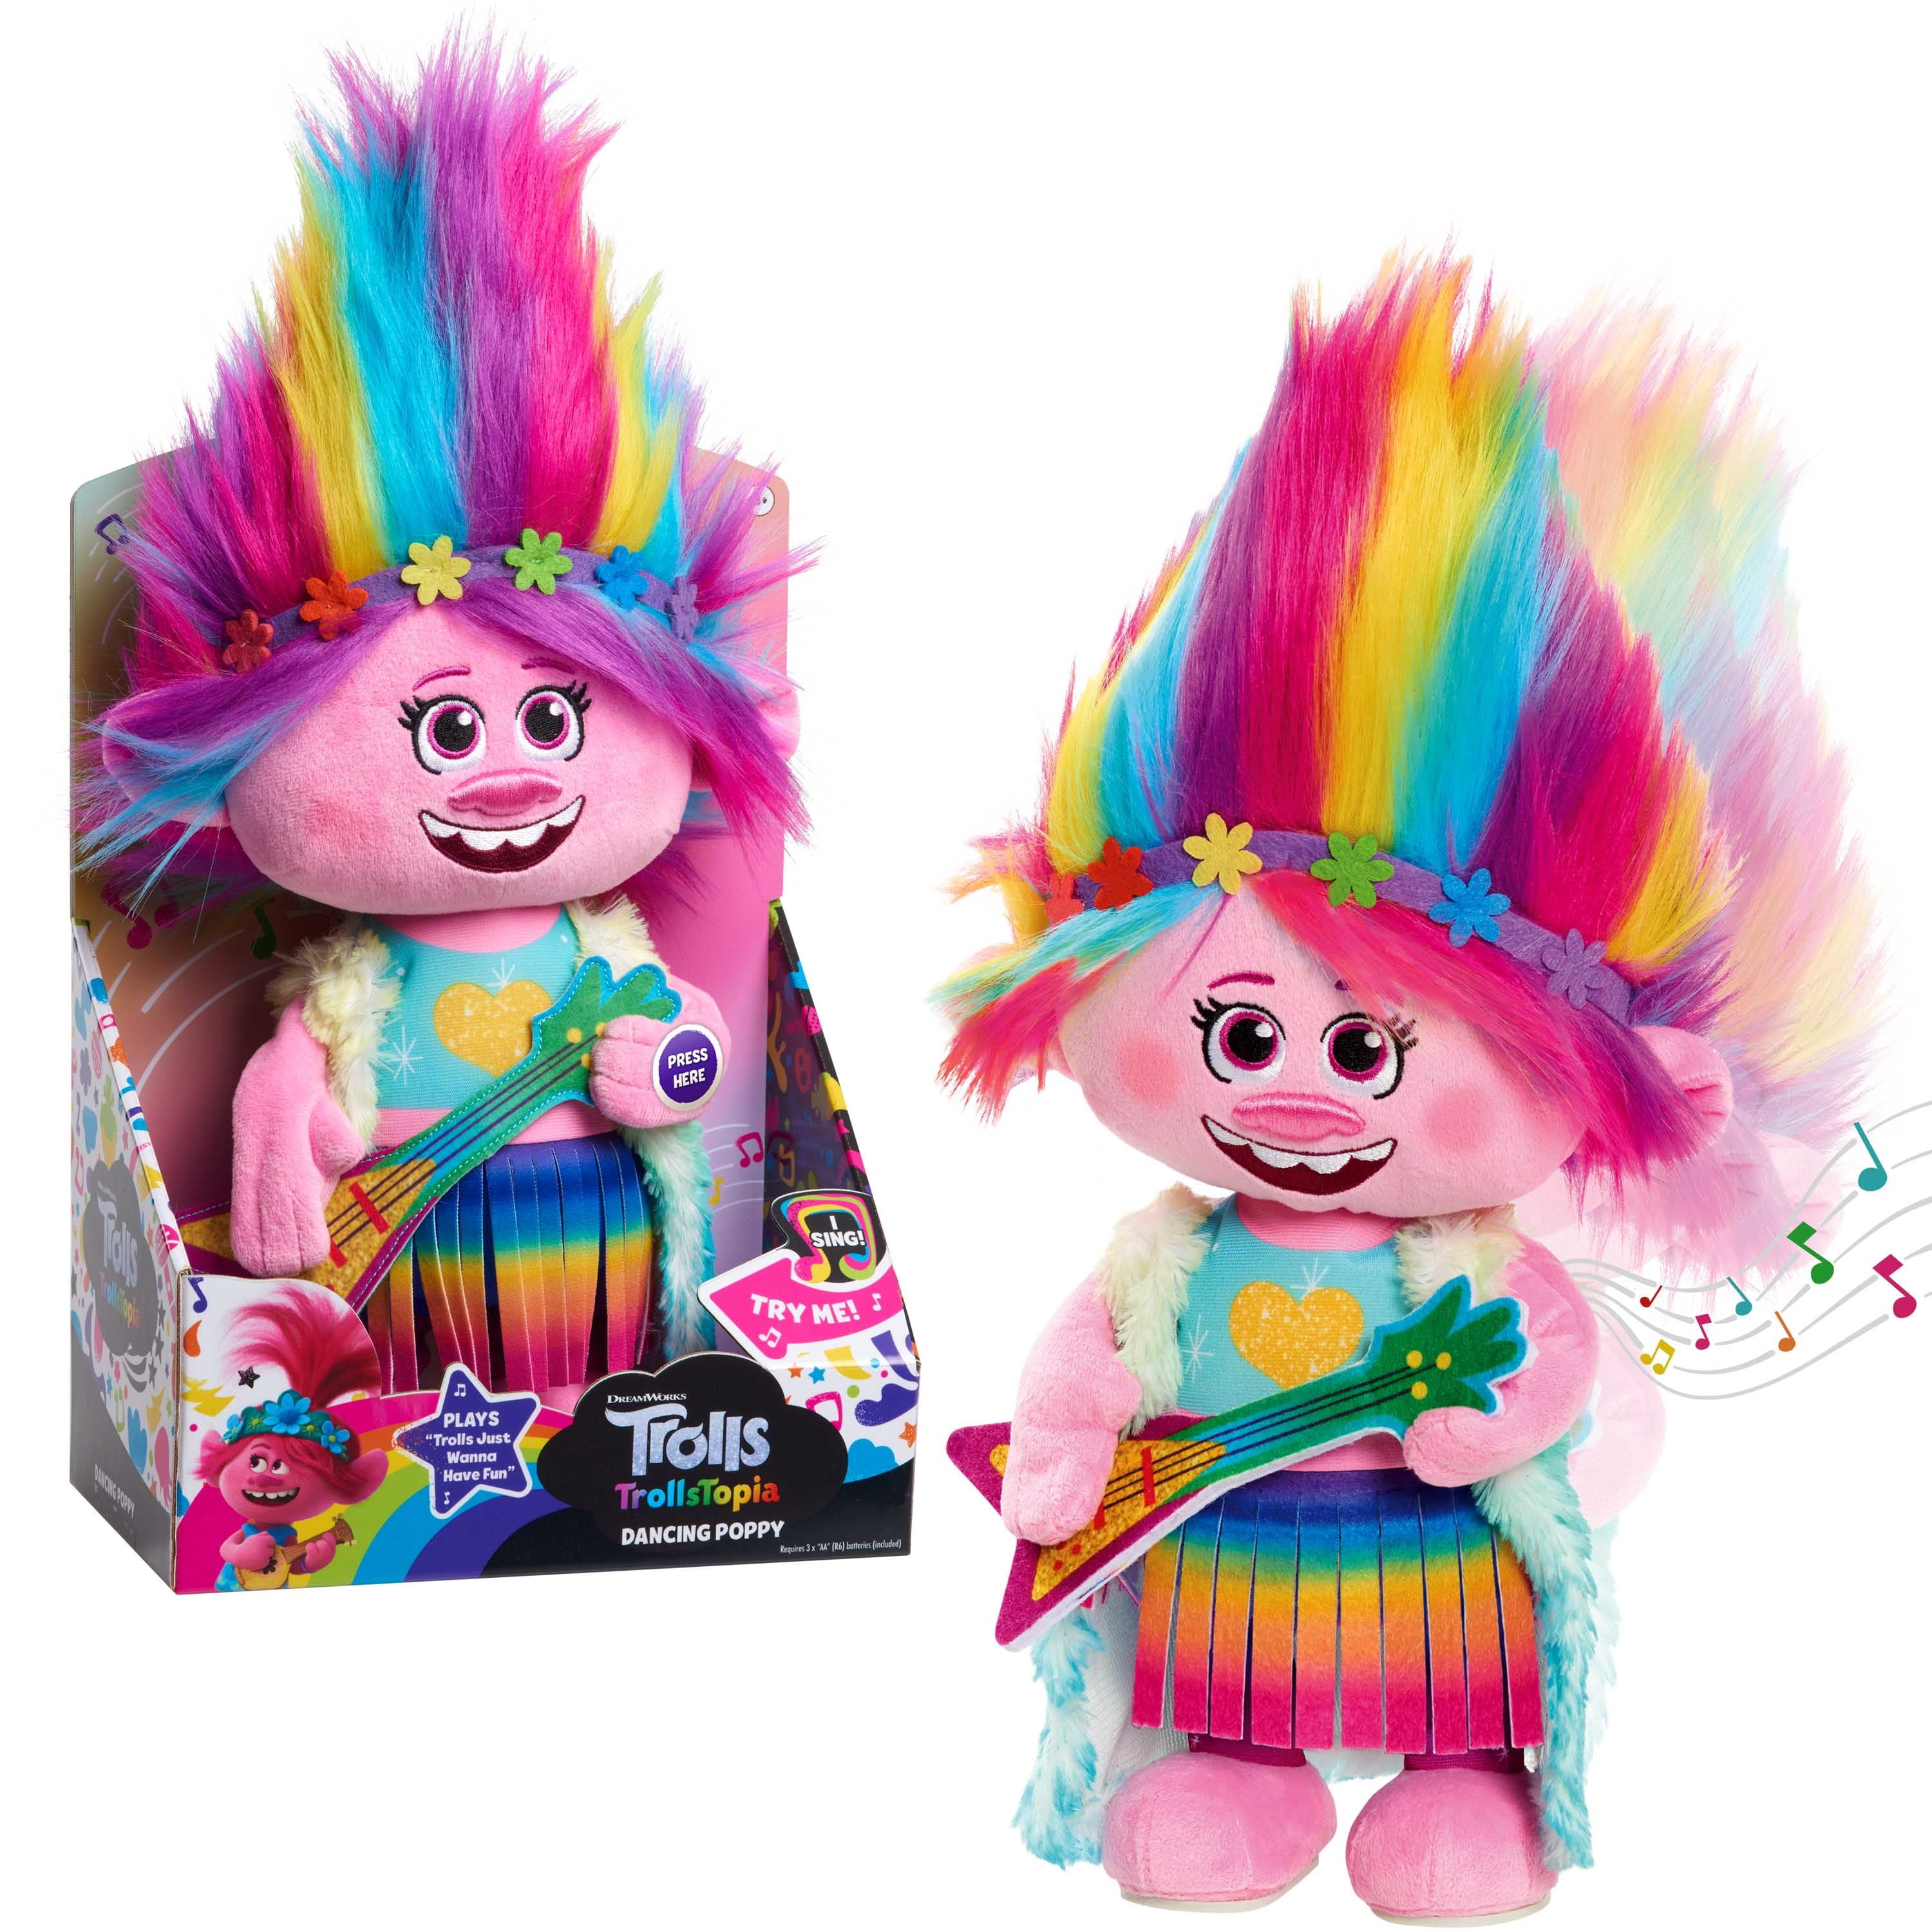 NEW Trolls Poppy Purse Playset Costume Play Dress Up Makeup Girls Toys 